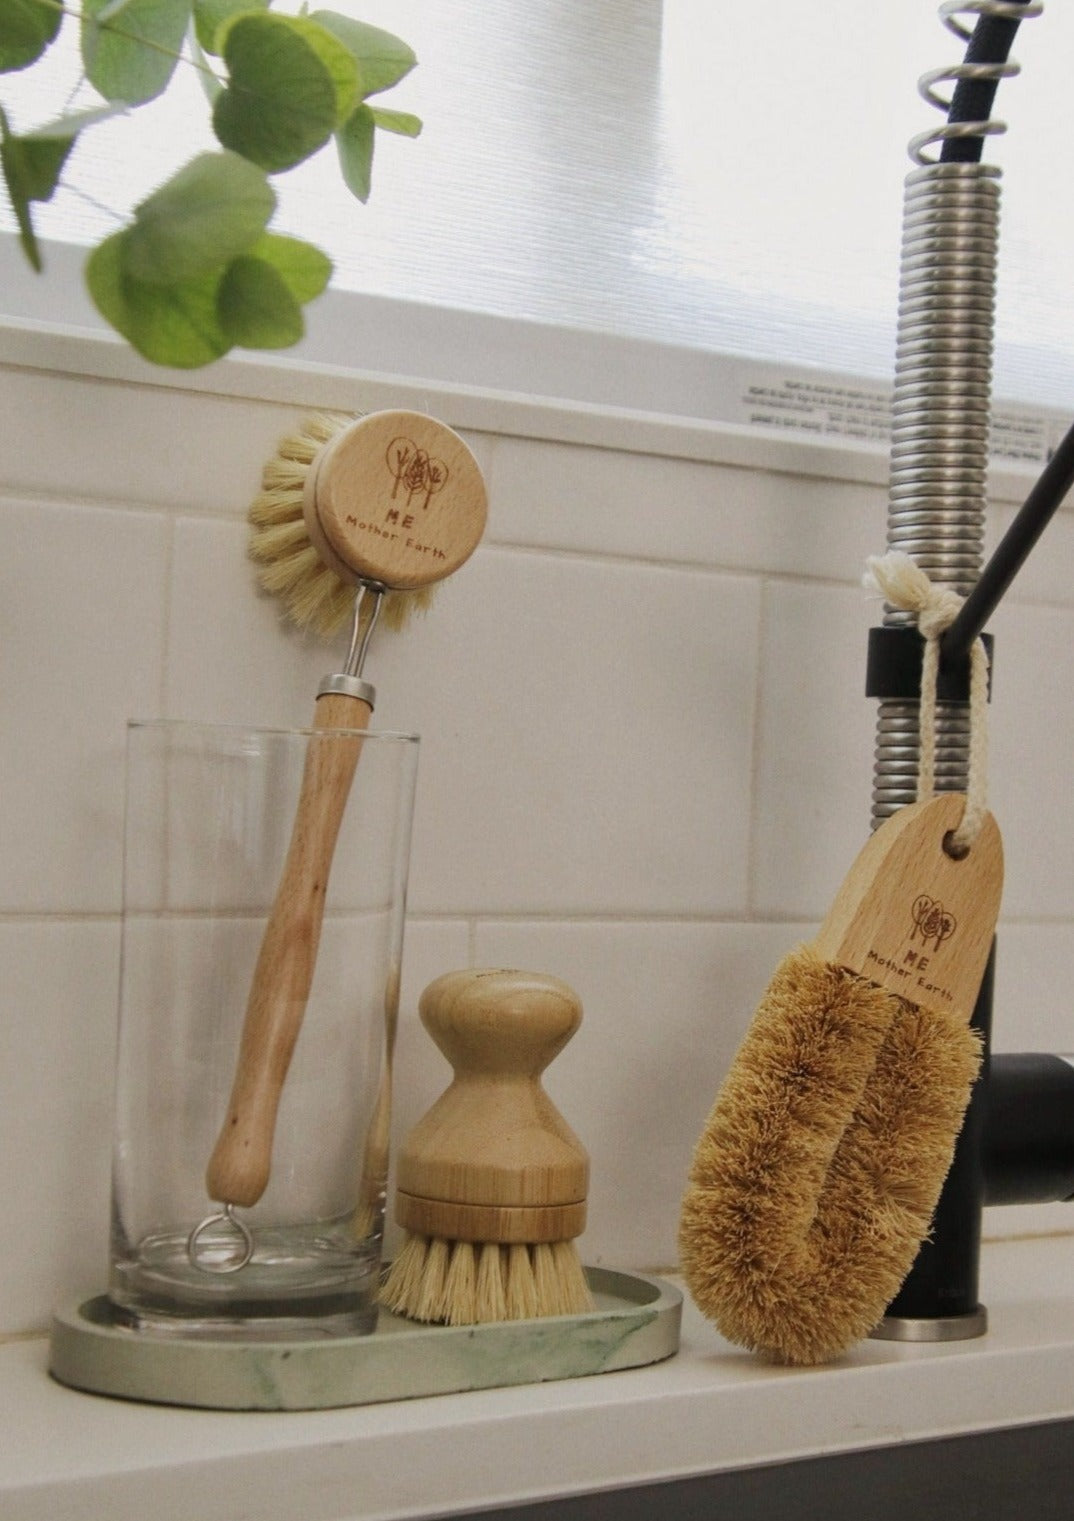 Dish Brush with Handle,Eco-Friendly Kitchen Dish Scrub Brush for Dishes(Pot  Dish Scrubber),Coconut Fiber Bristle with Wooden Handle,Dishwashing Brush